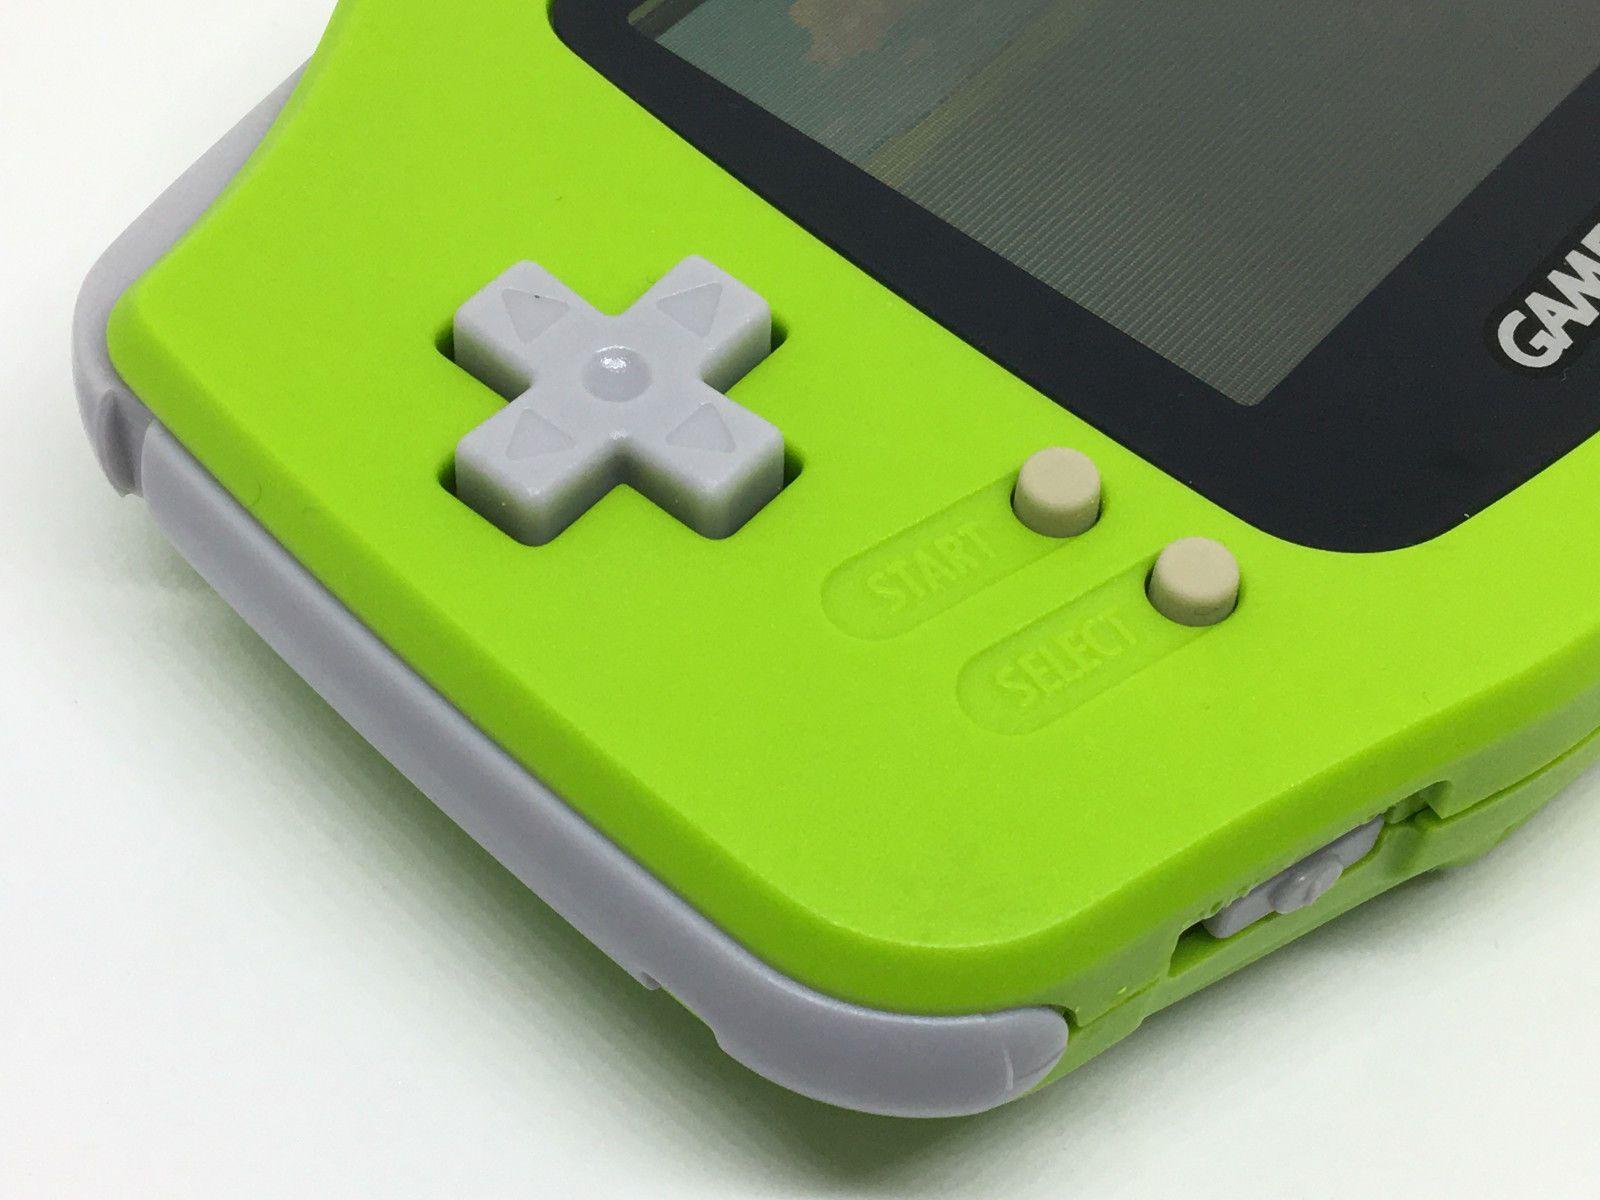 Lime Green C Gaming Logo - Nintendo GBA AGS 101 Backlight Mod USB C Gameboy Advance GBA E Gamer